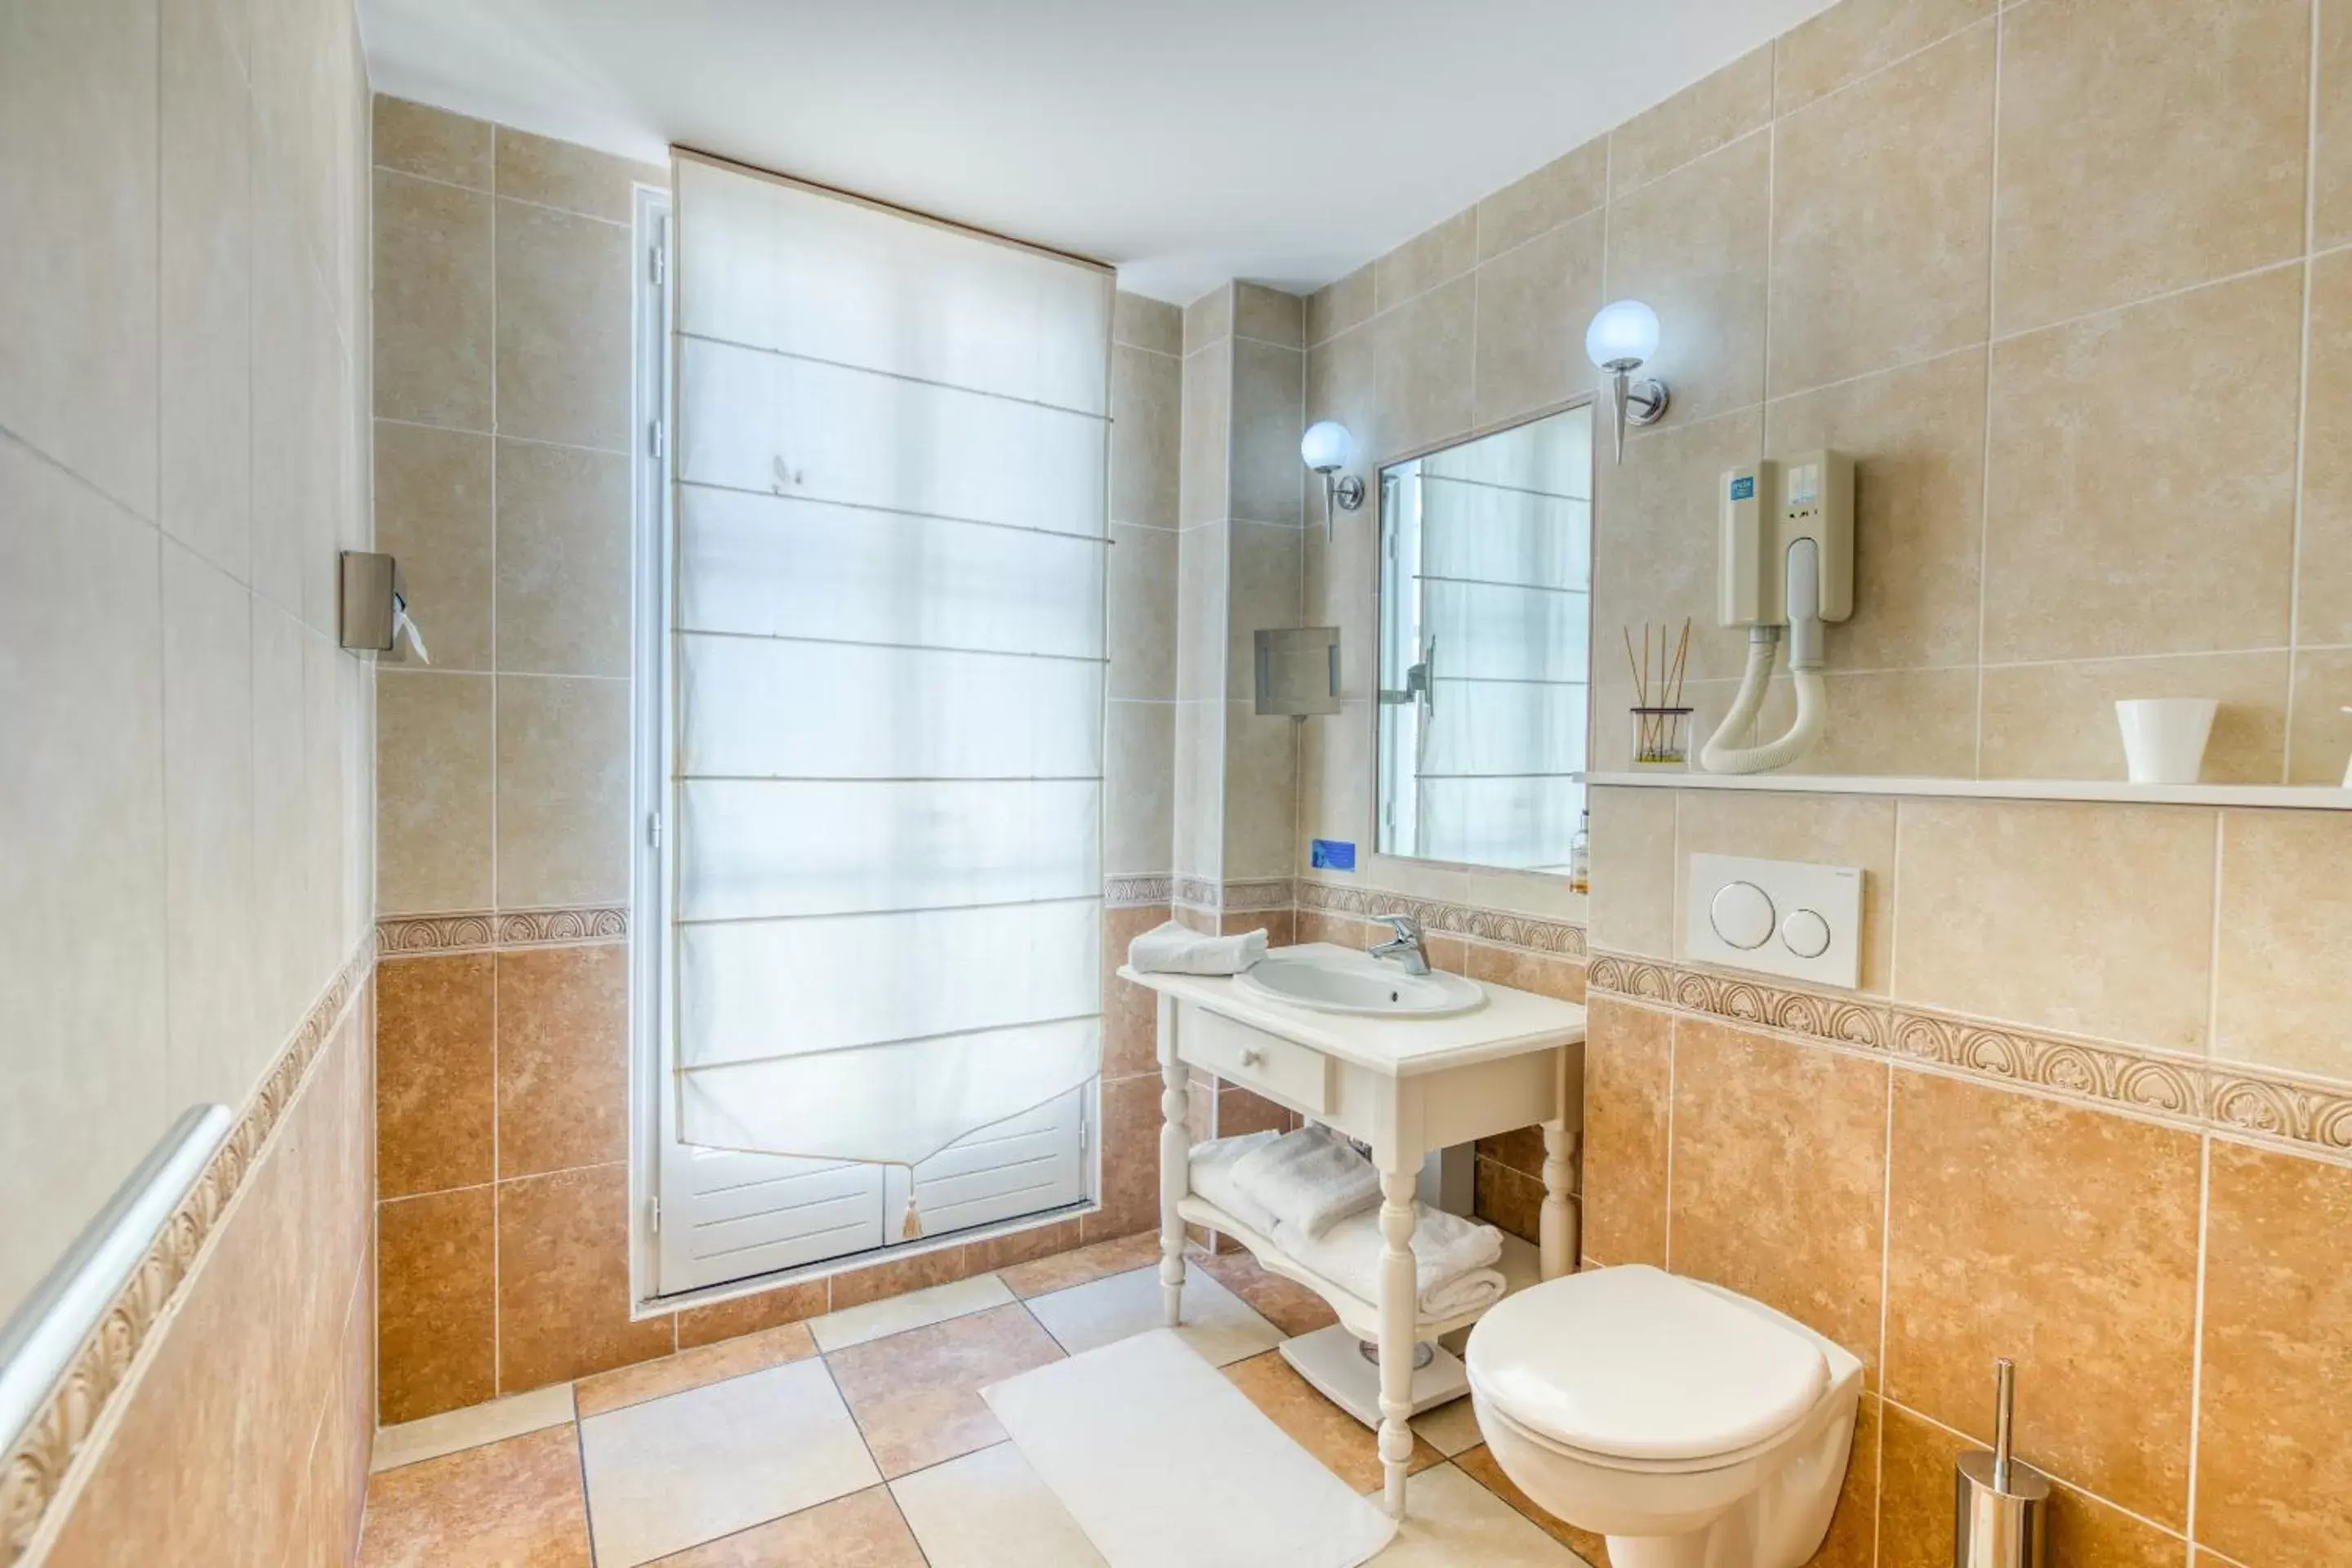 Bathroom in Hotel d'Aragon